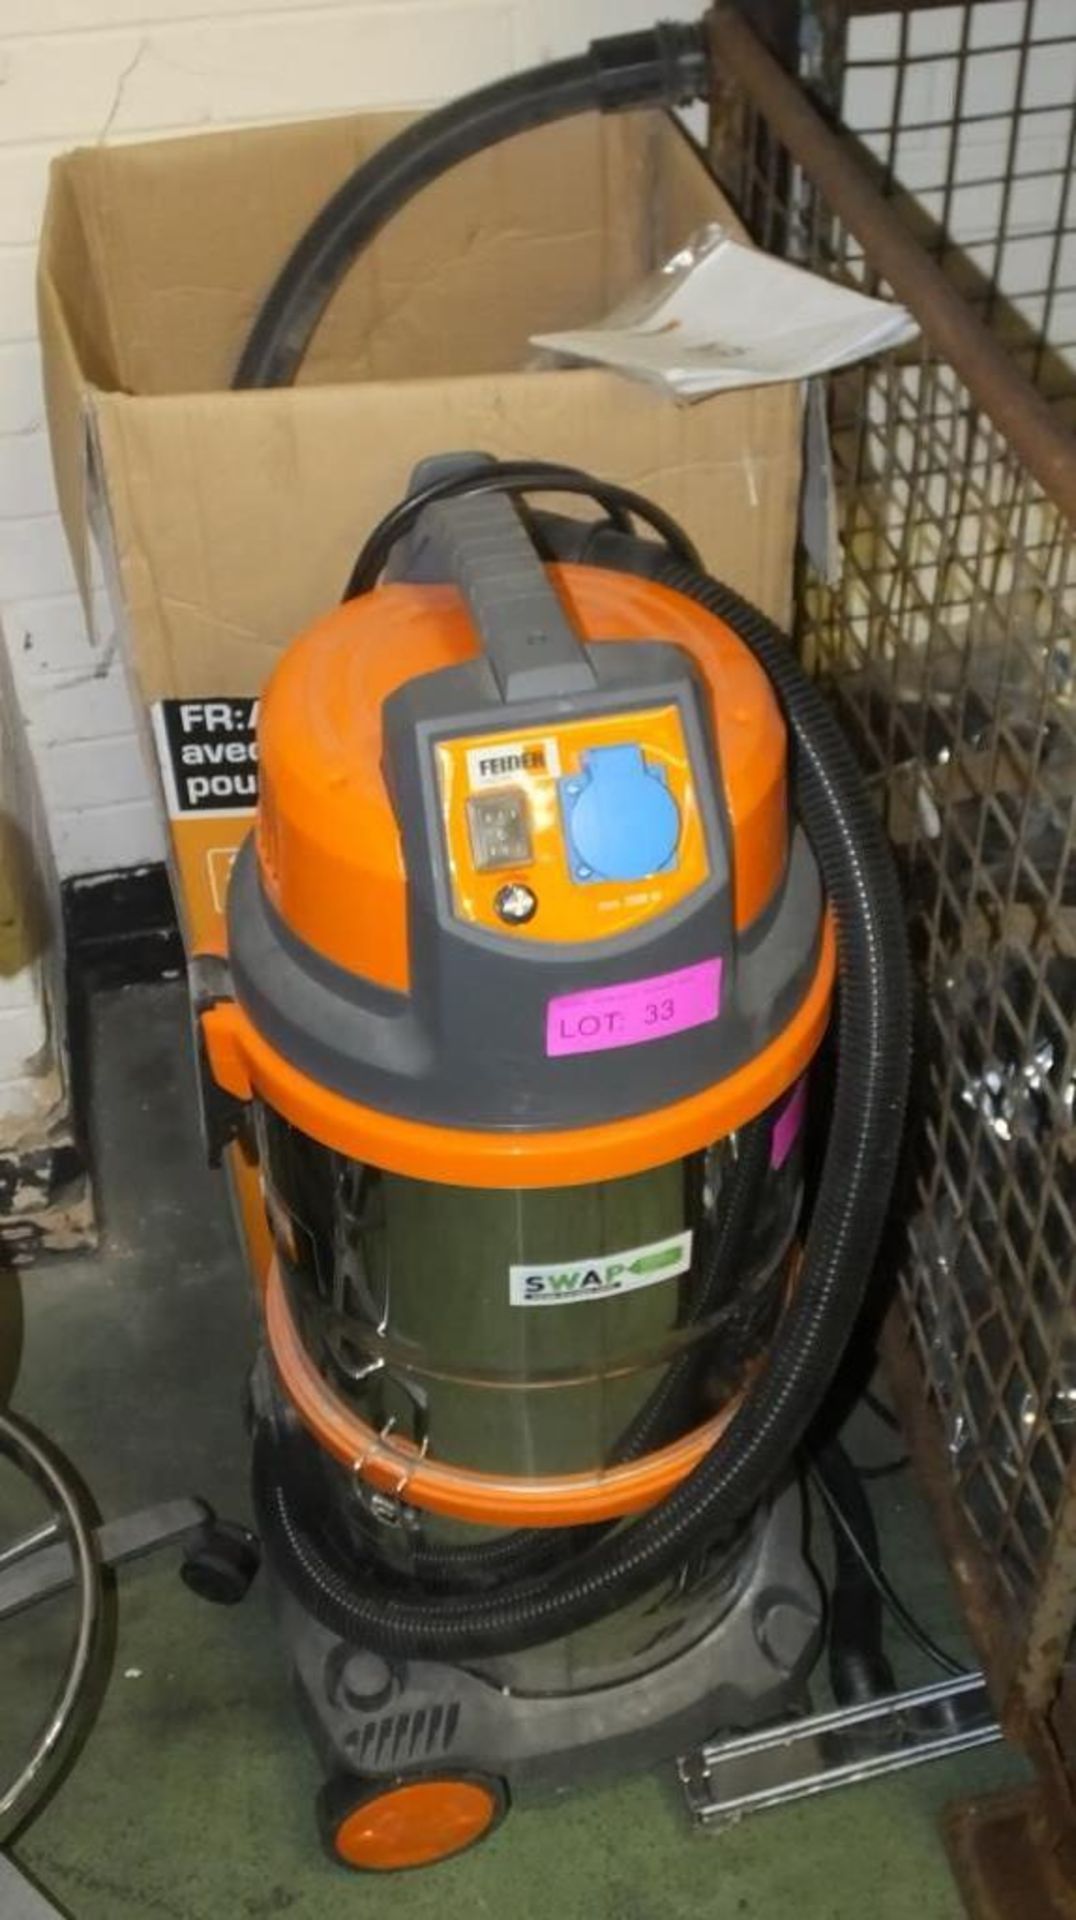 Fieder FAP1440 wet / dry vacuum cleaner